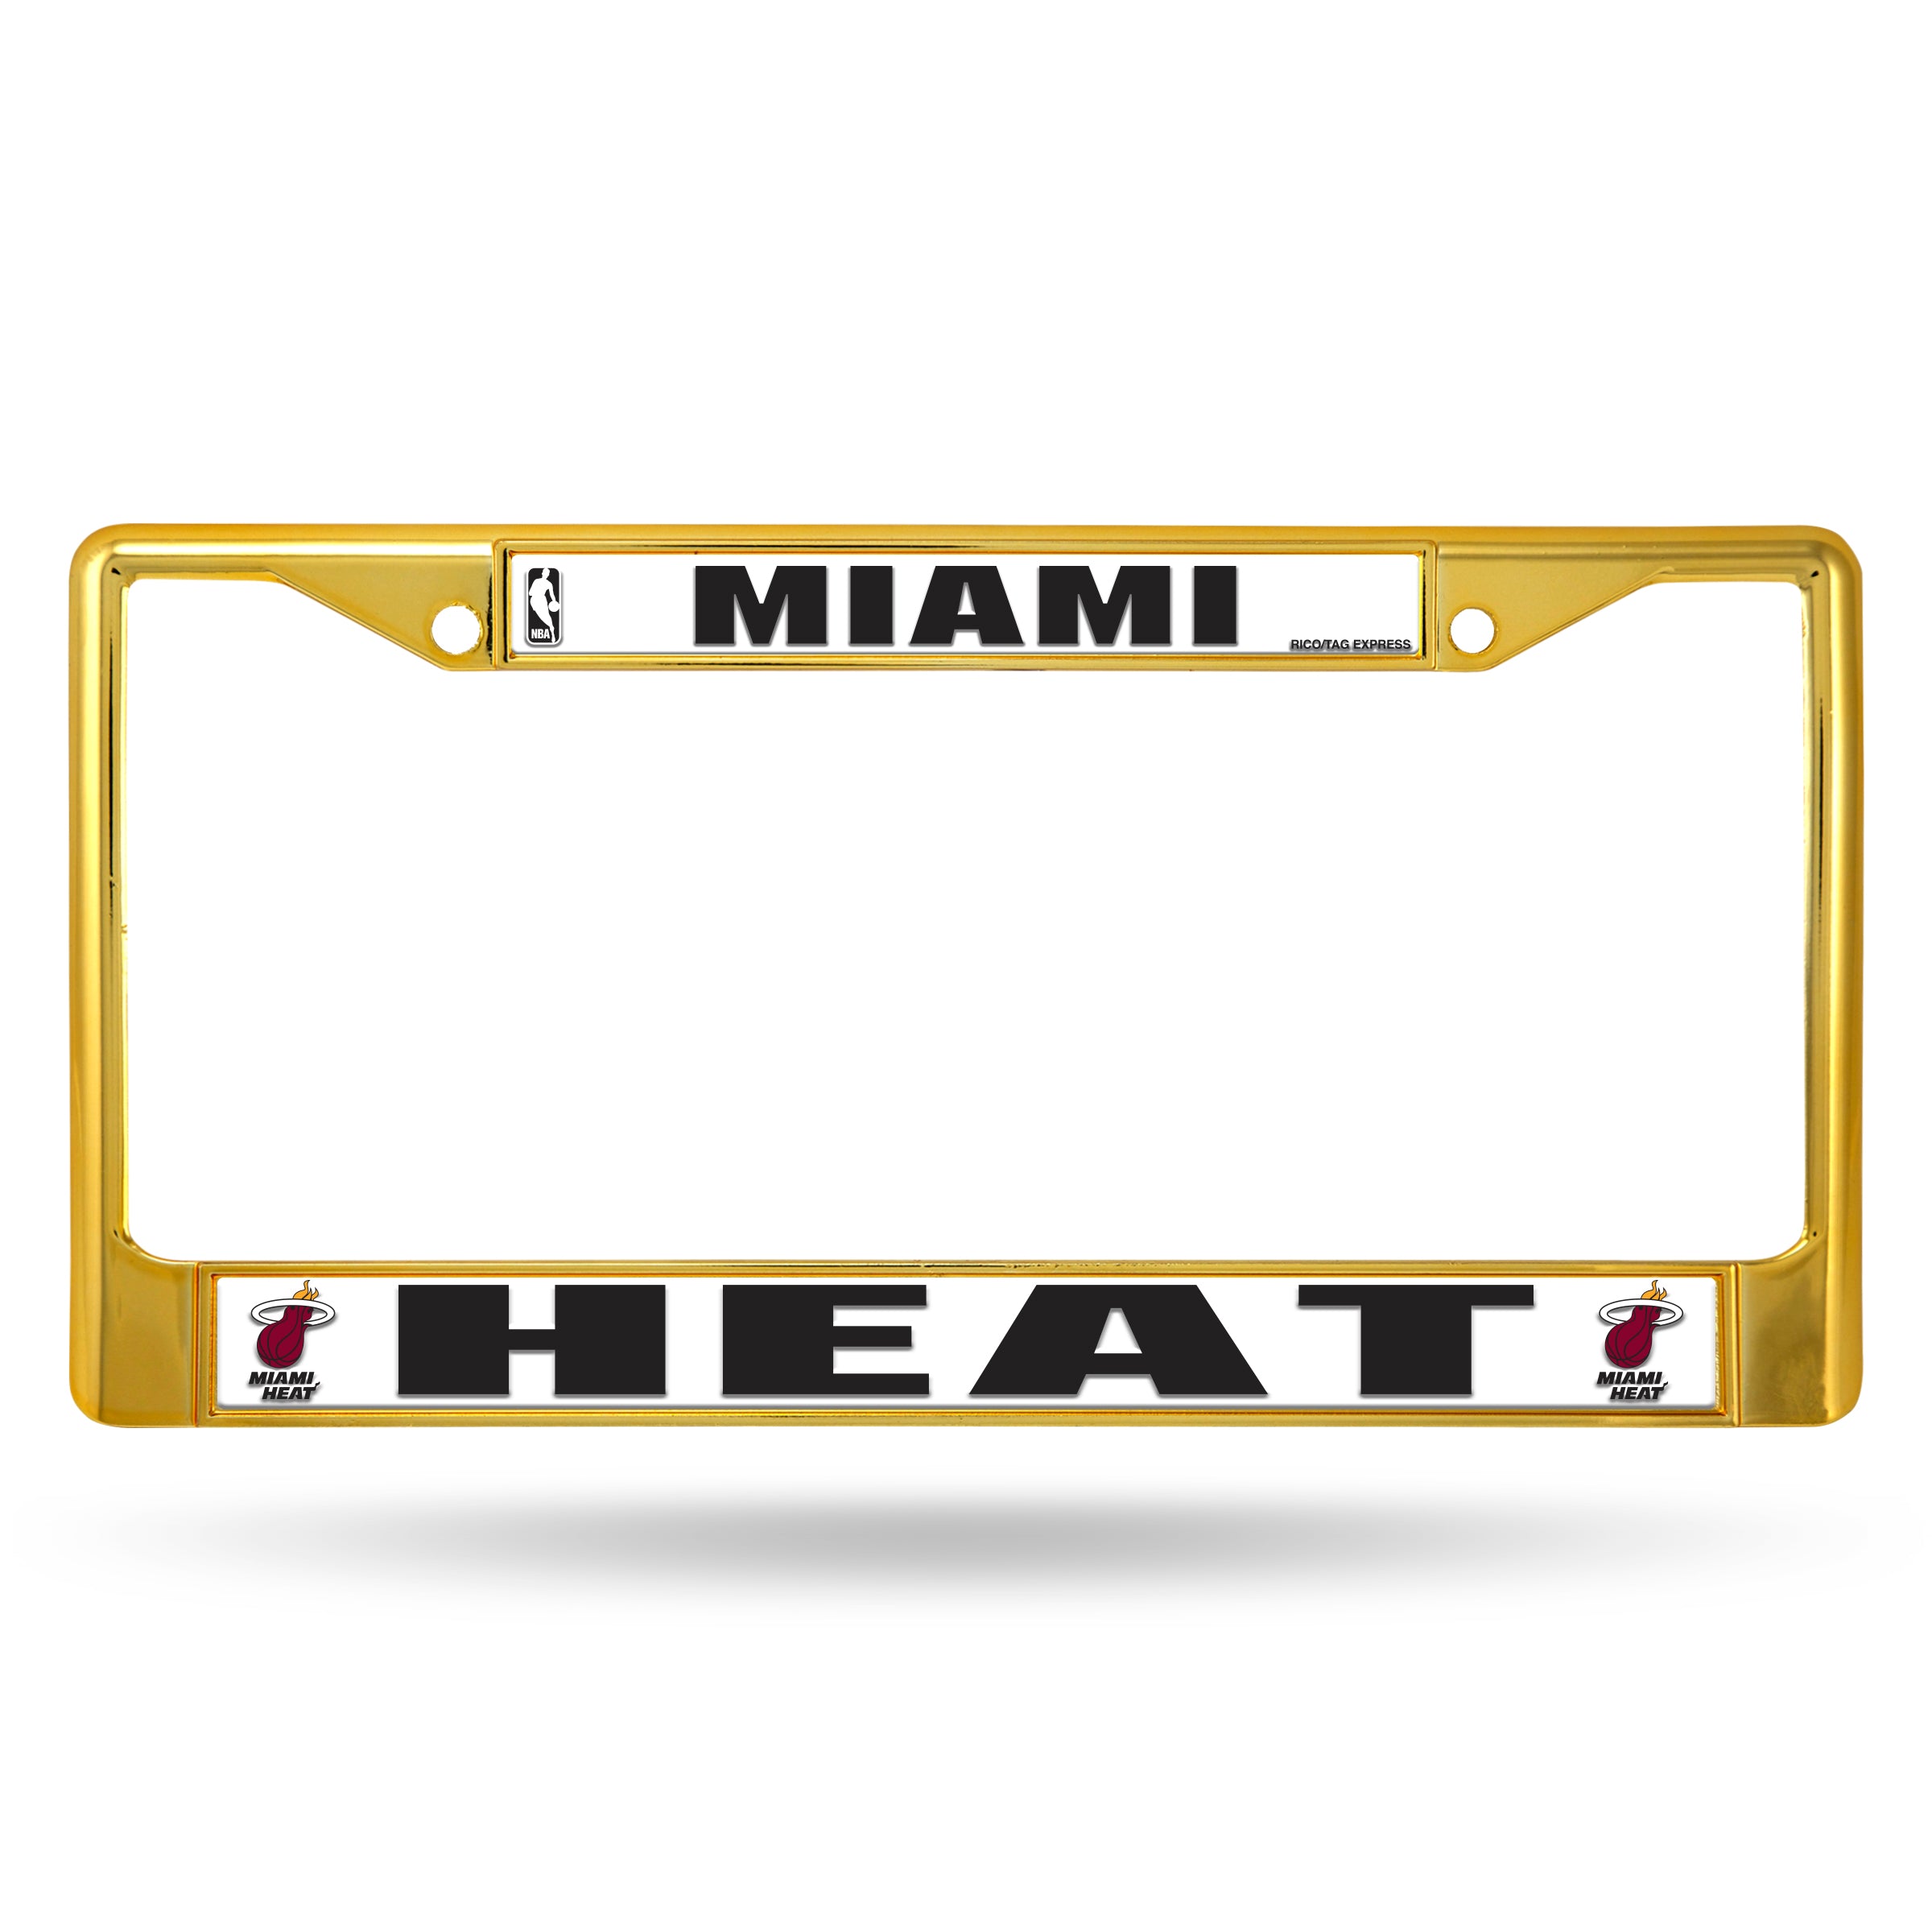 Miami Heat Colored Chrome 12 x 6 Gold License Plate Frame